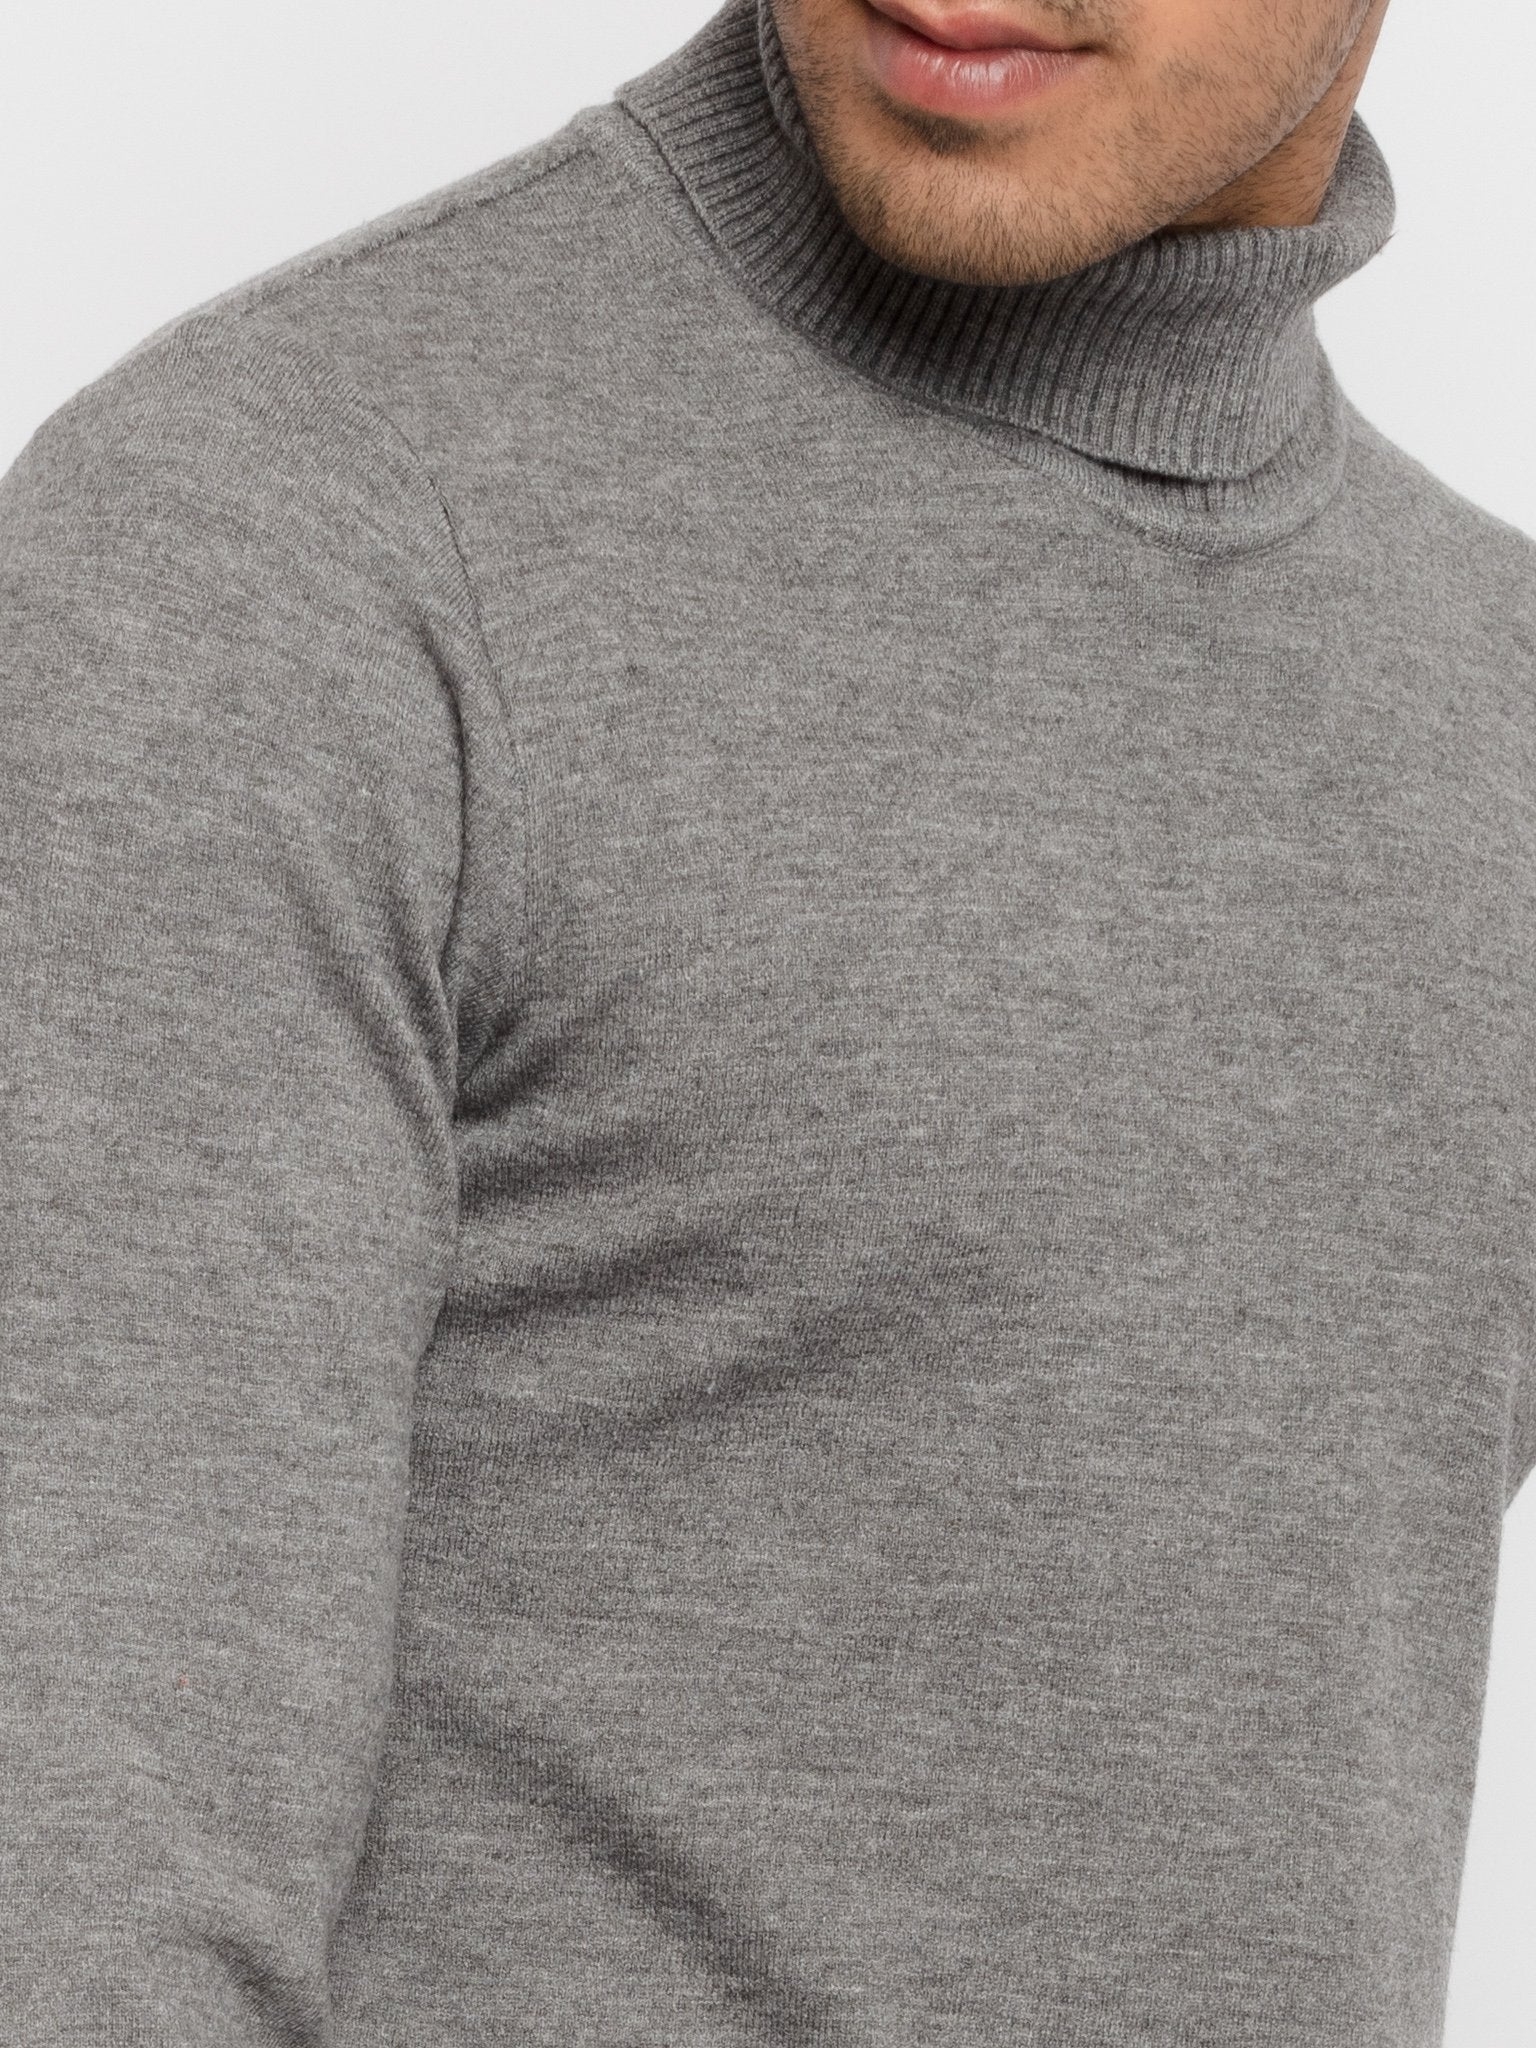 Men's Grey Polycotton Melange Sweaters